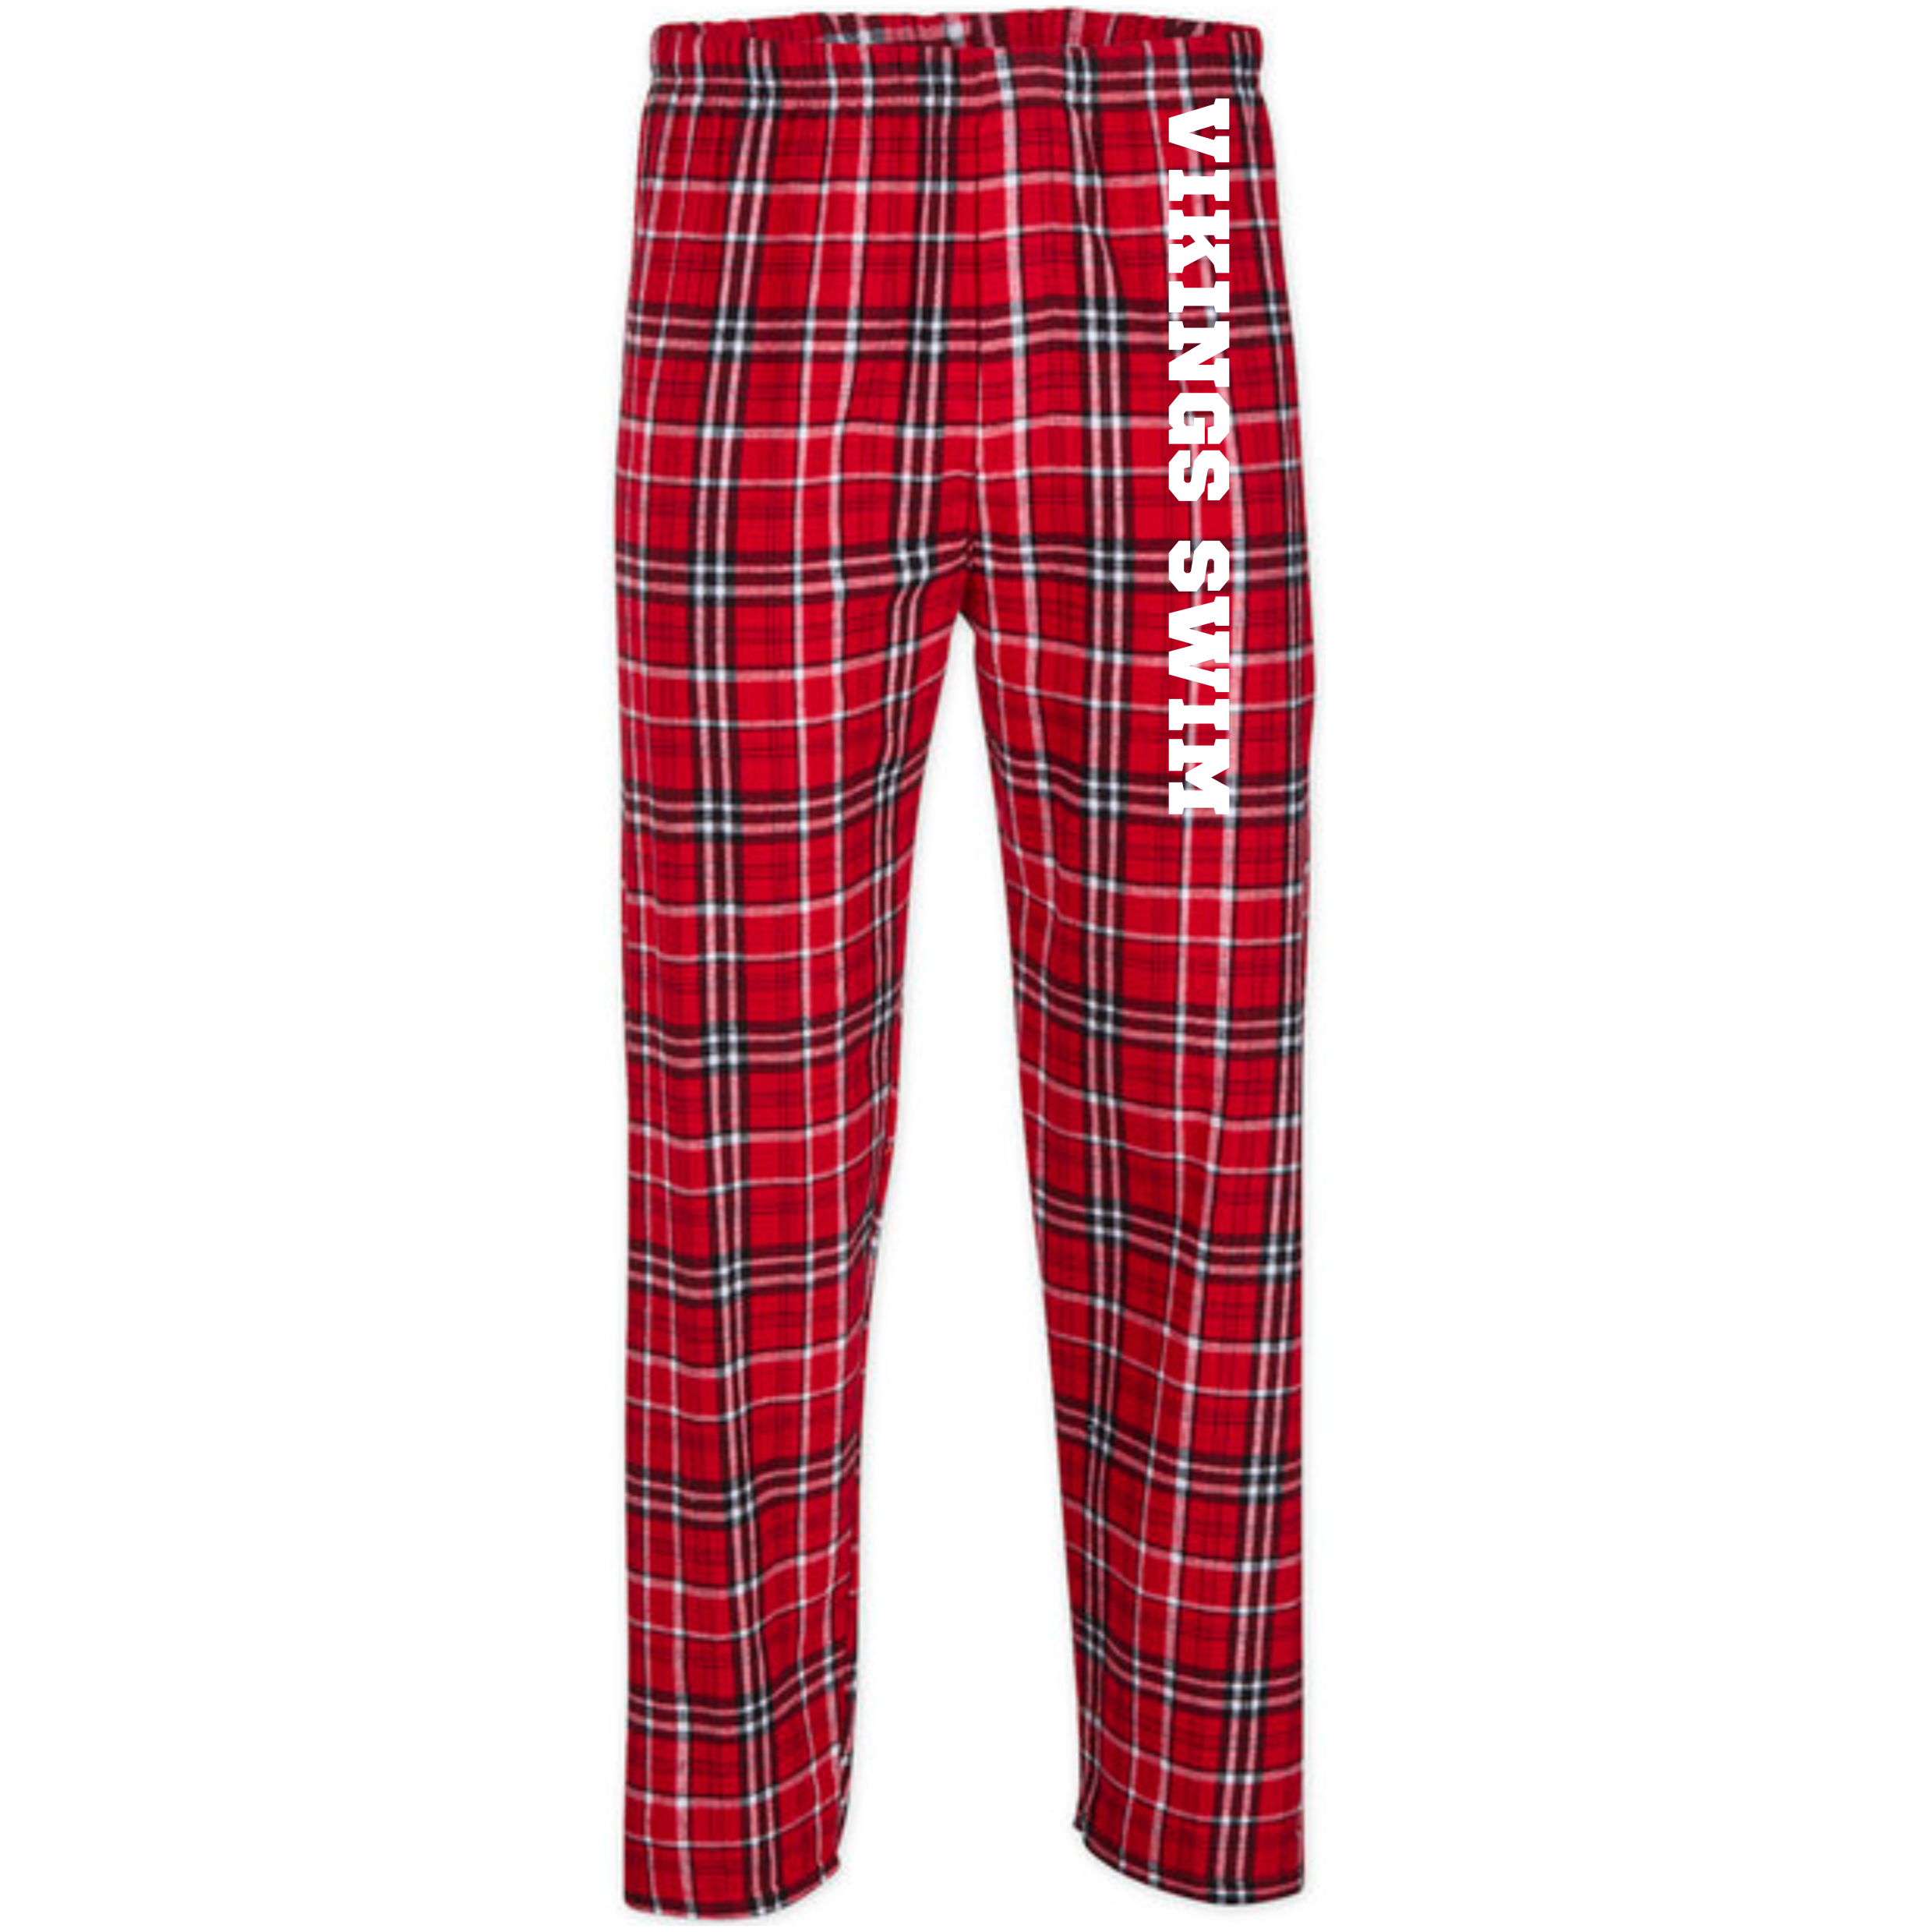 Boxercraft Flannel Pants (Customized) - St Anne